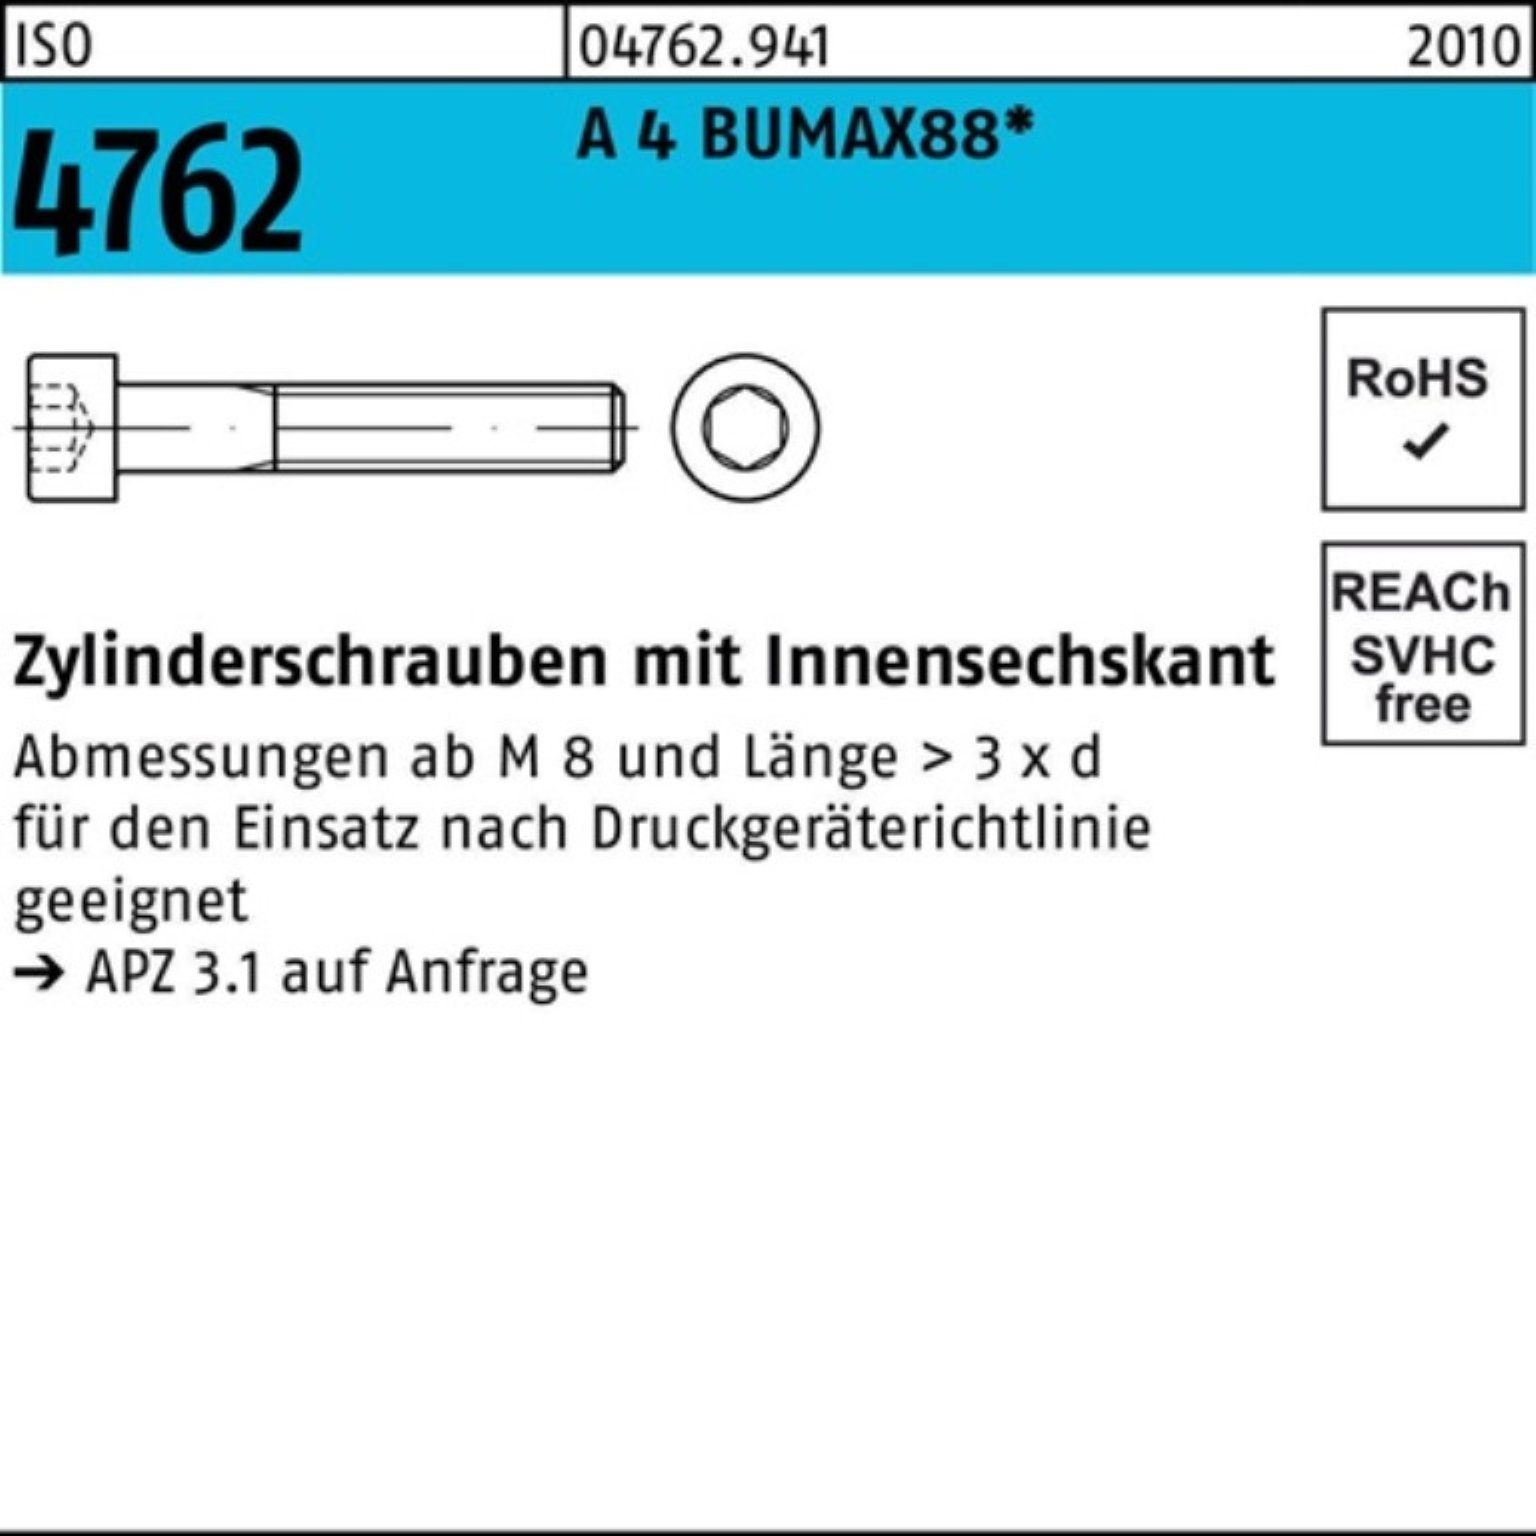 4 Zylinderschraube Zylinderschraube 4762 ISO S Innen-6kt A BUMAX88 50 M8x Pack 35 Bufab 100er